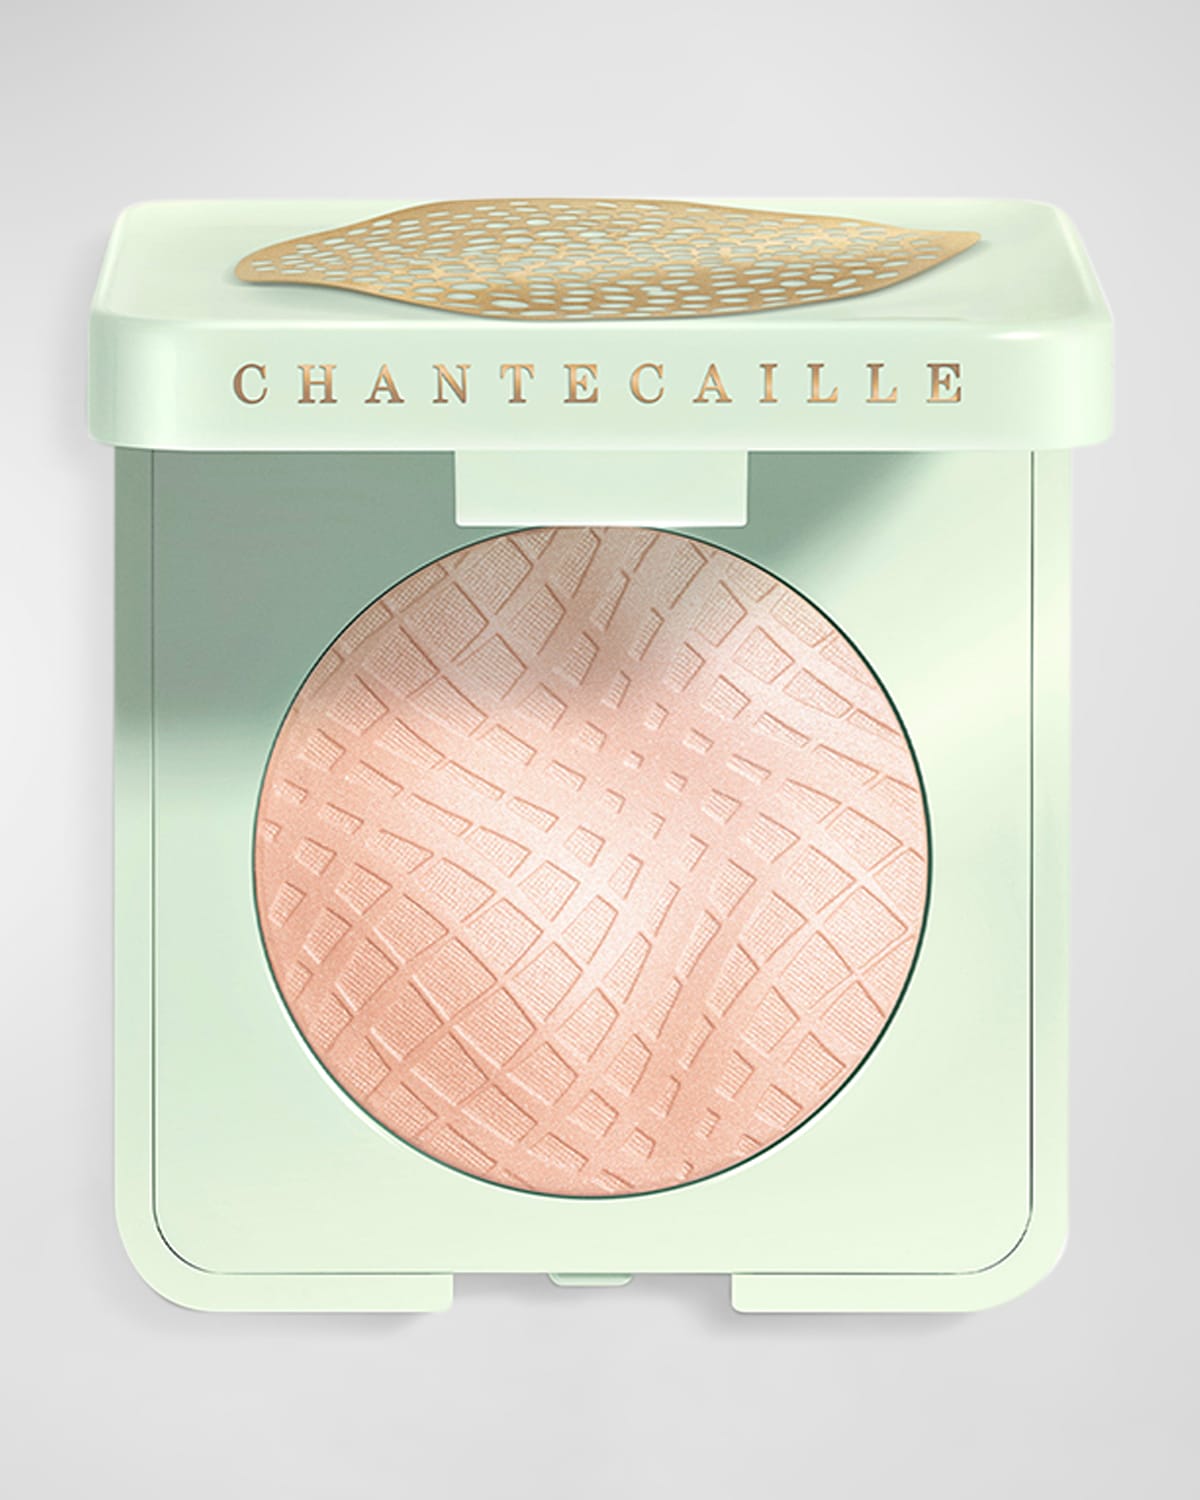 Chantecaille Fragrance Discovery Set